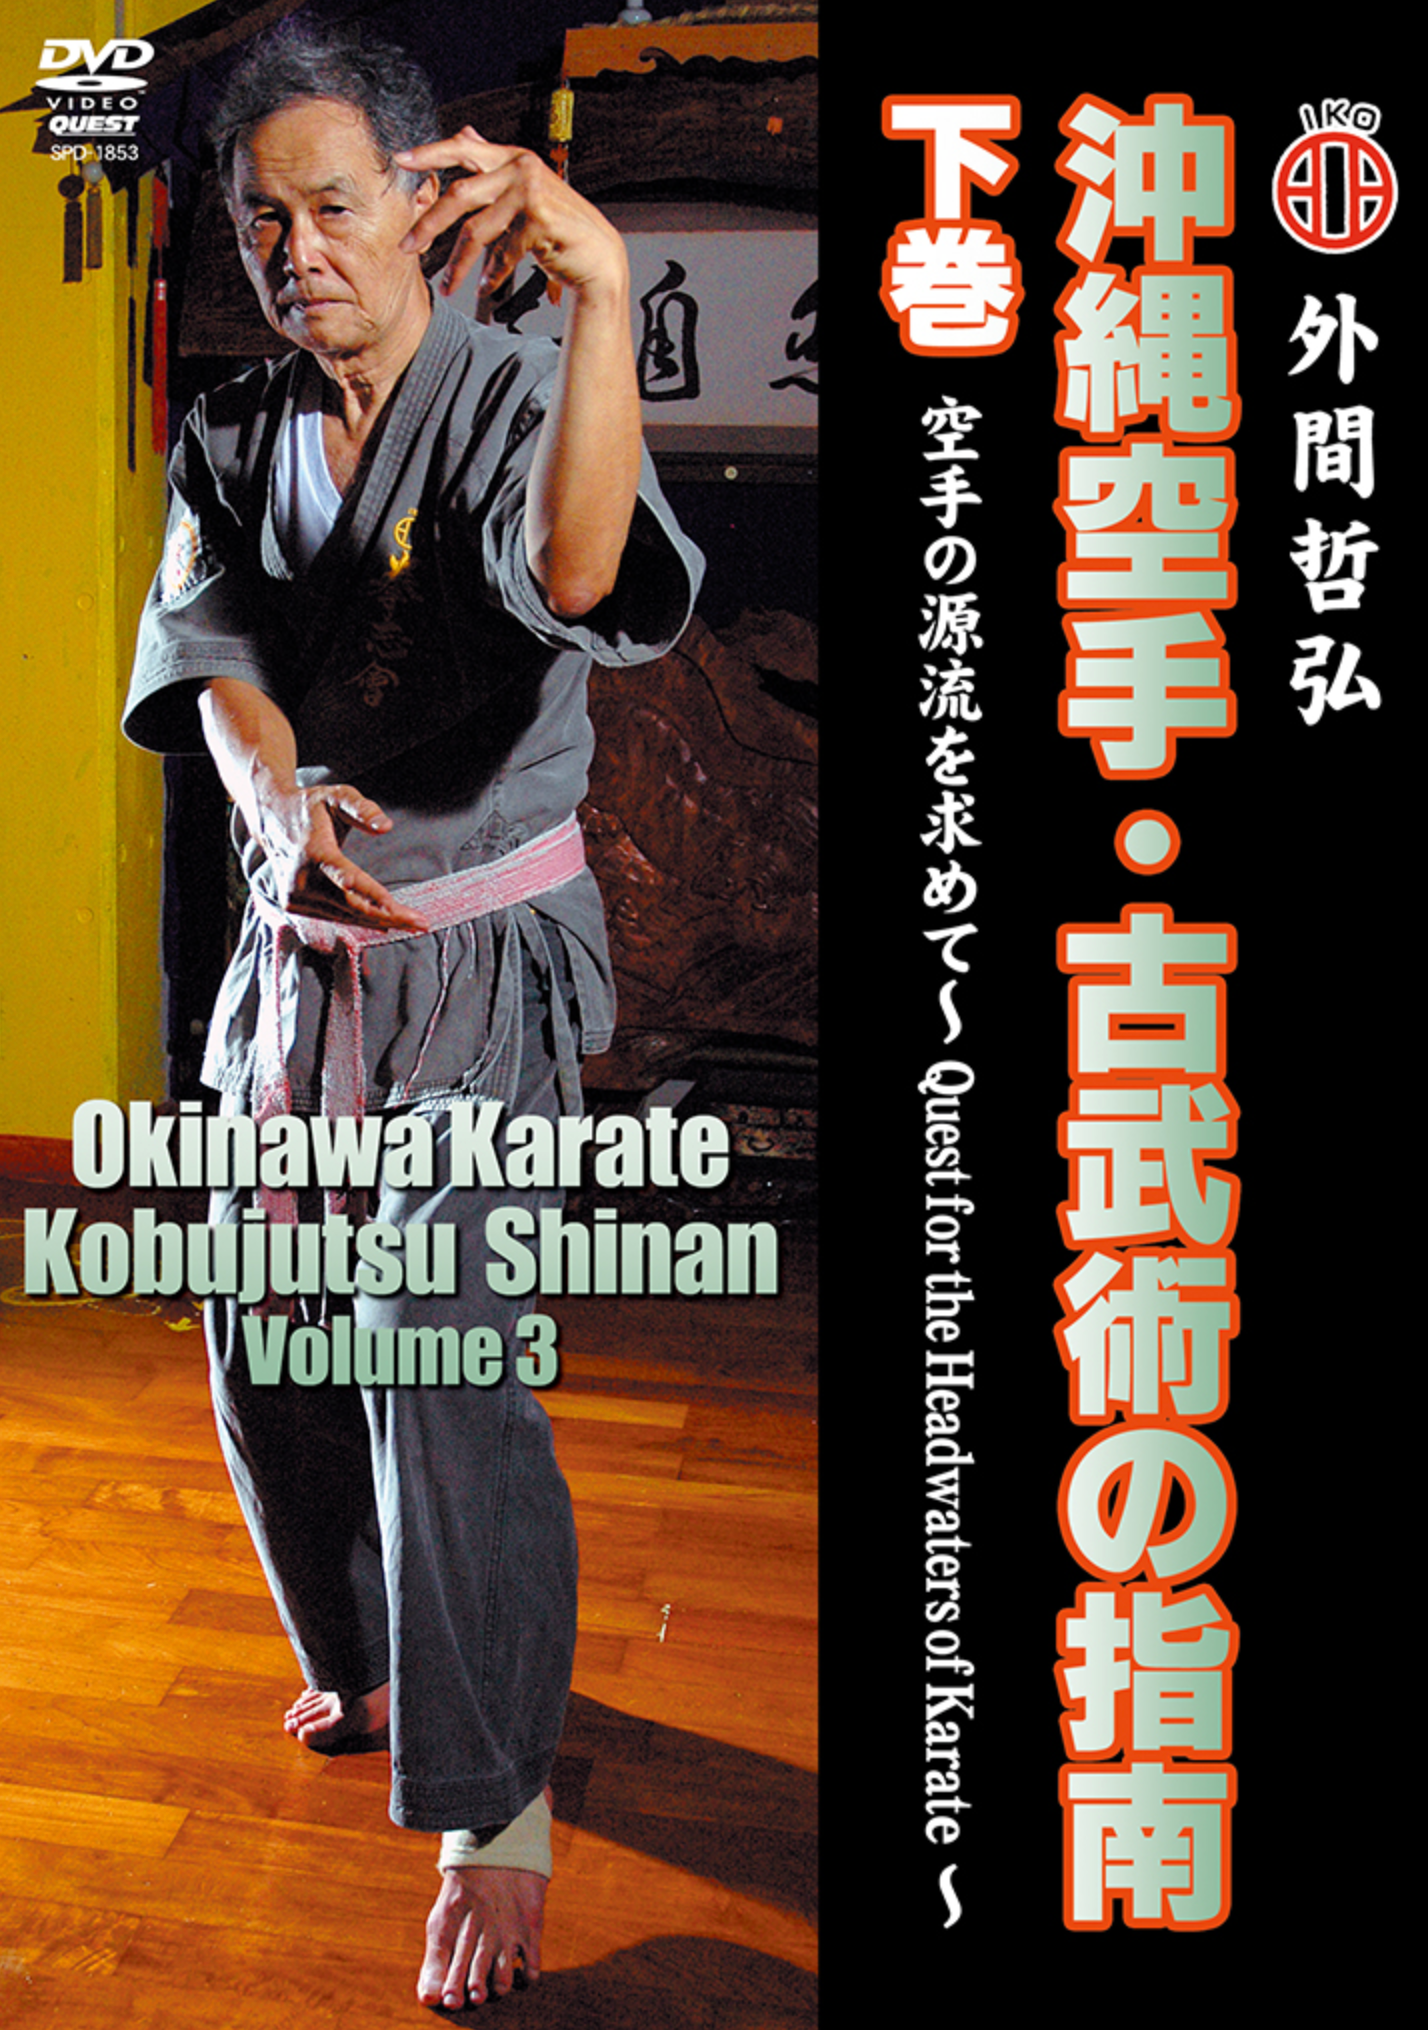 Okinawa Karate Kobujutsu Shinan Vol 3 DVD with Tetsuhiro Hokama - Budovideos Inc